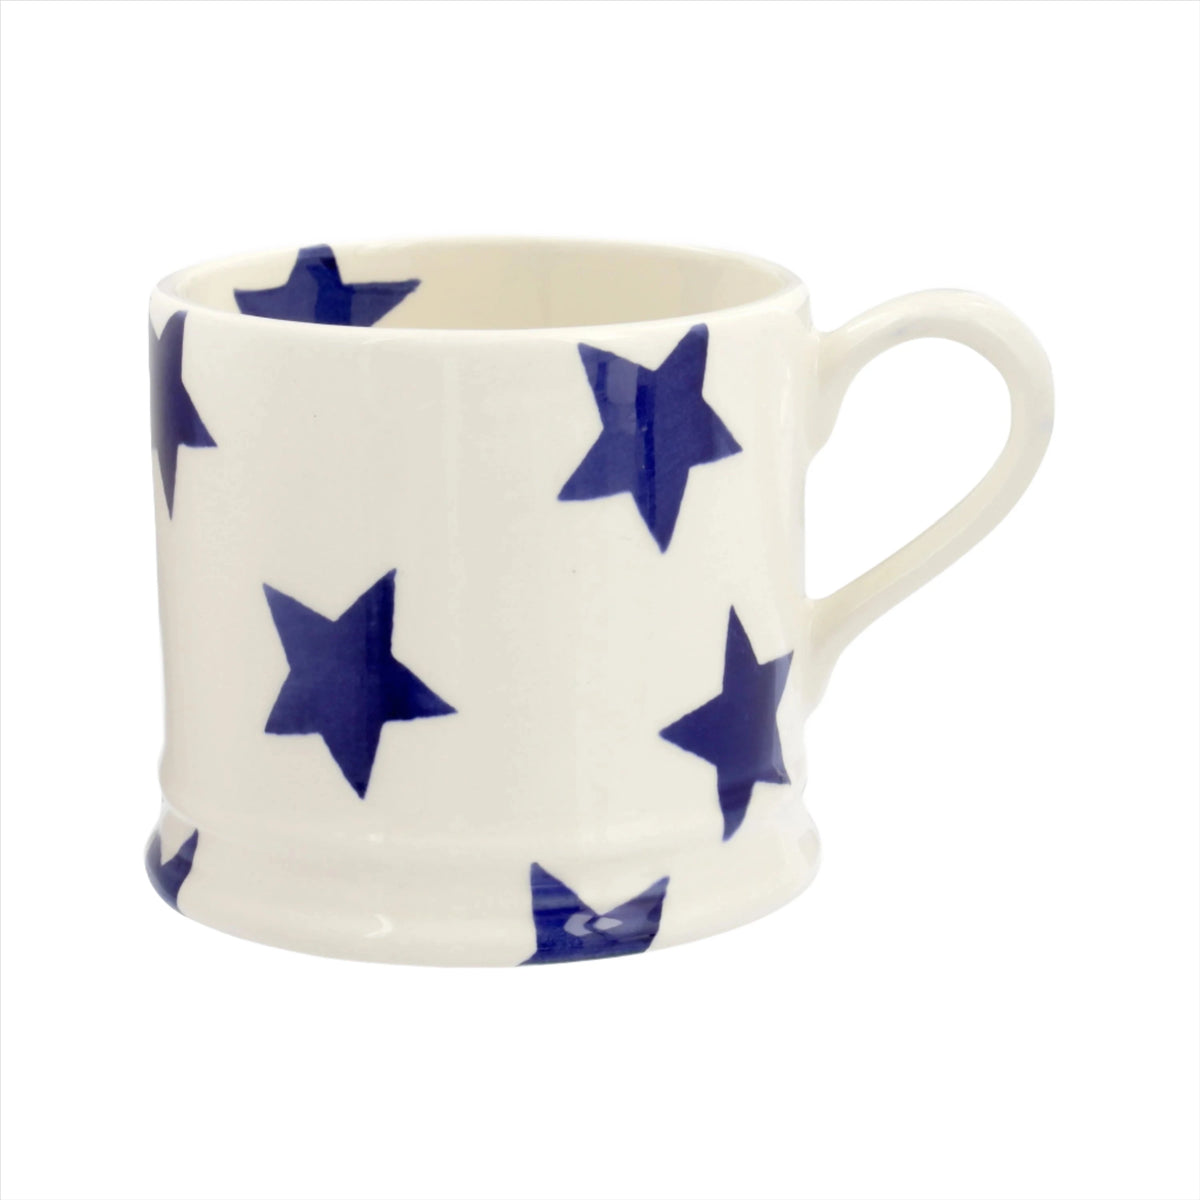 Blue Star Small Mug